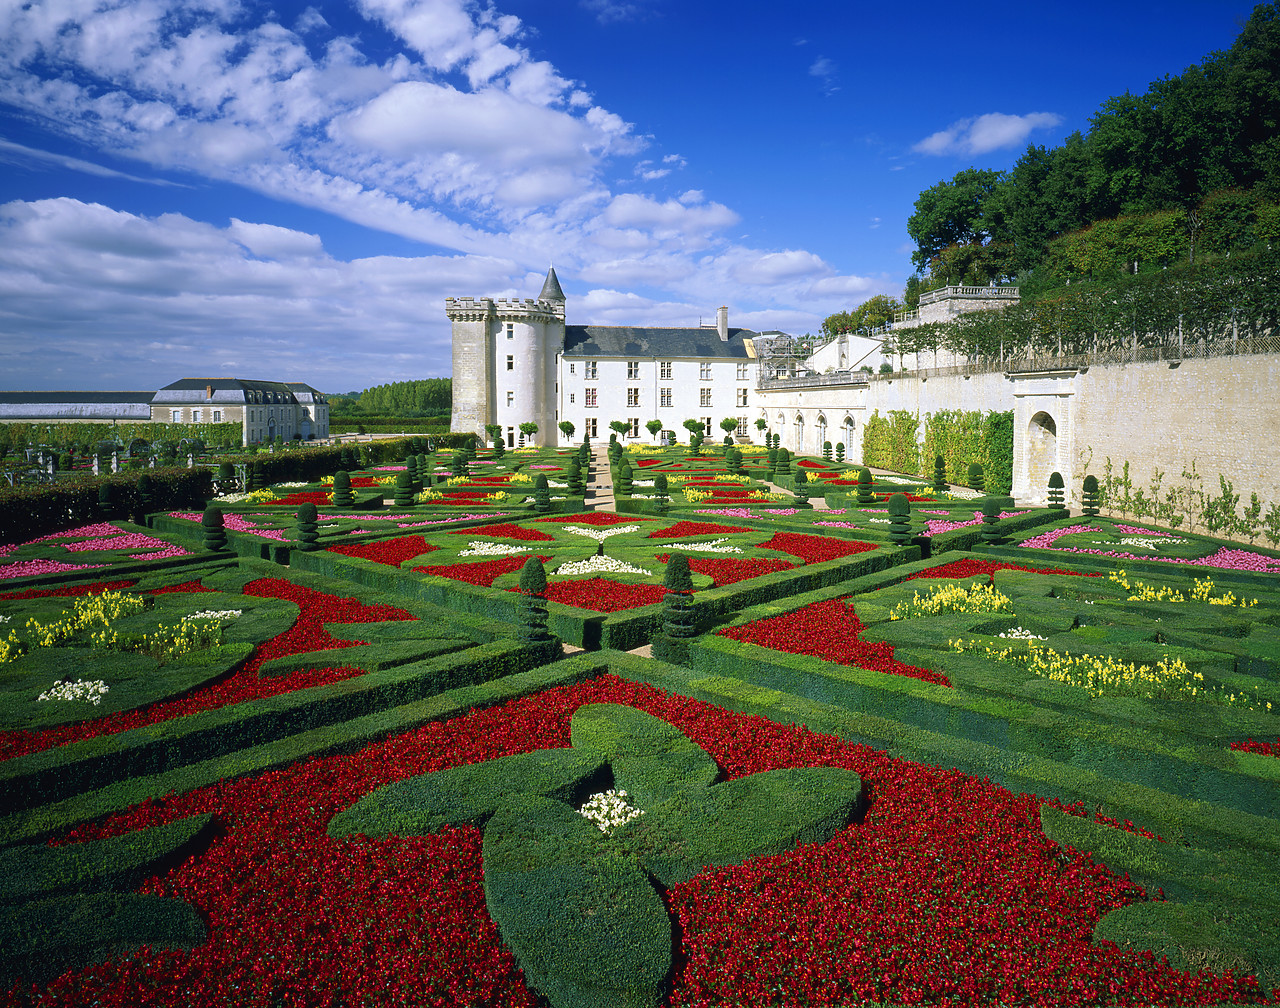 #200276-1 - Chateau Villandry & Garden of Love, Loire Valley, France